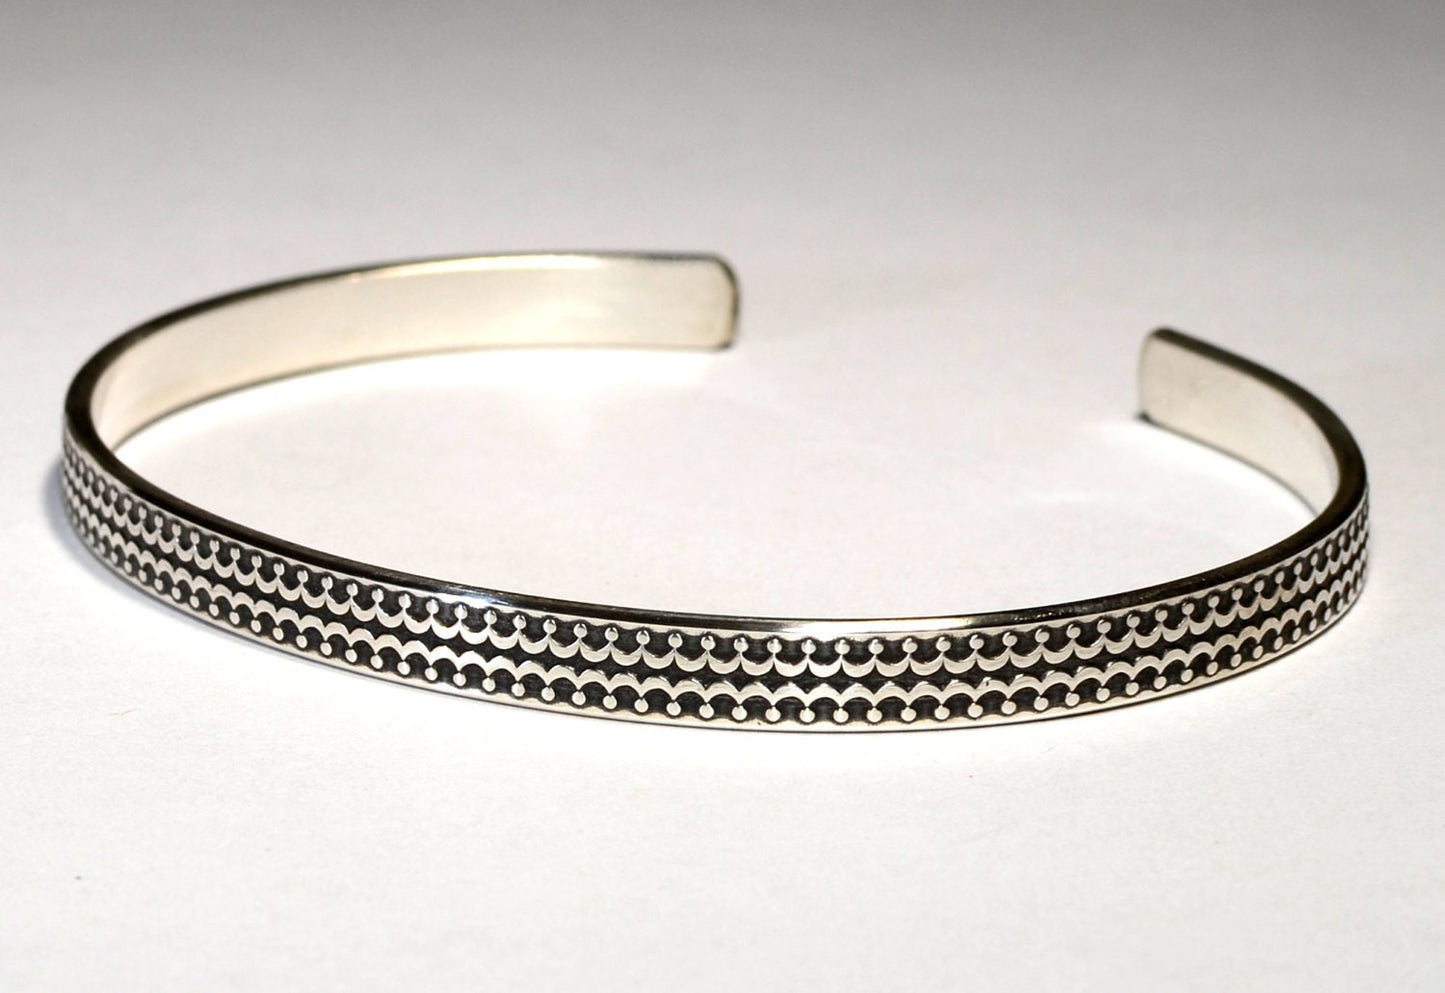 Sterling Silver Double Crown Patterned Narrow Bracelet